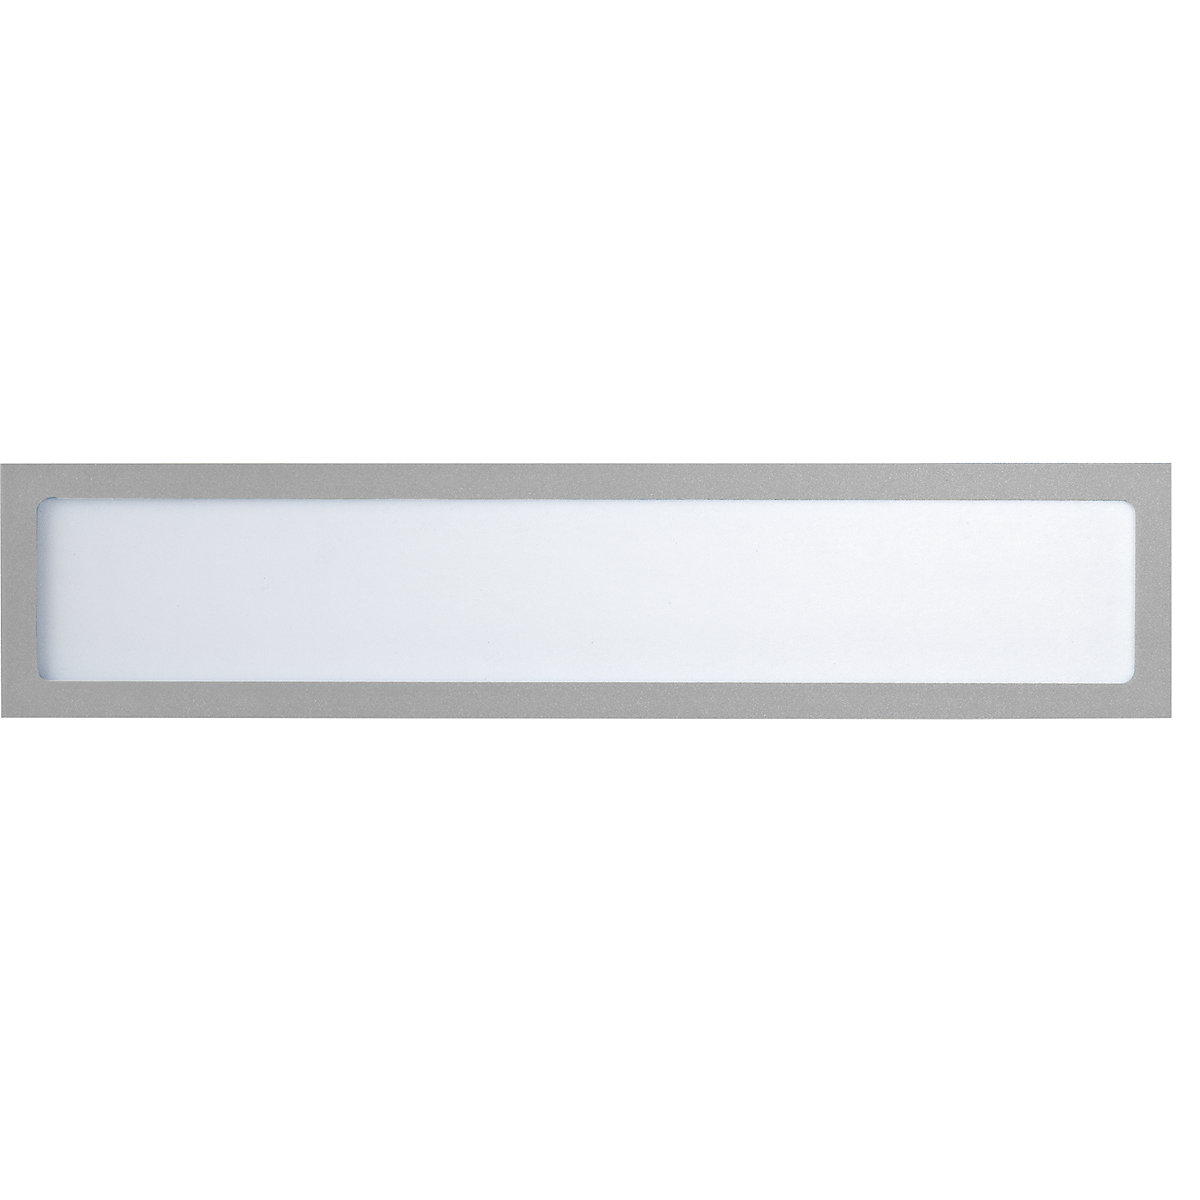 Magnetni informacijski džep – eurokraft basic, za natpise, DIN A4 poprečno / DIN A3 uspravno, 312 x 60 mm, okvir u srebrnoj boji, pak. 10 kom.-8